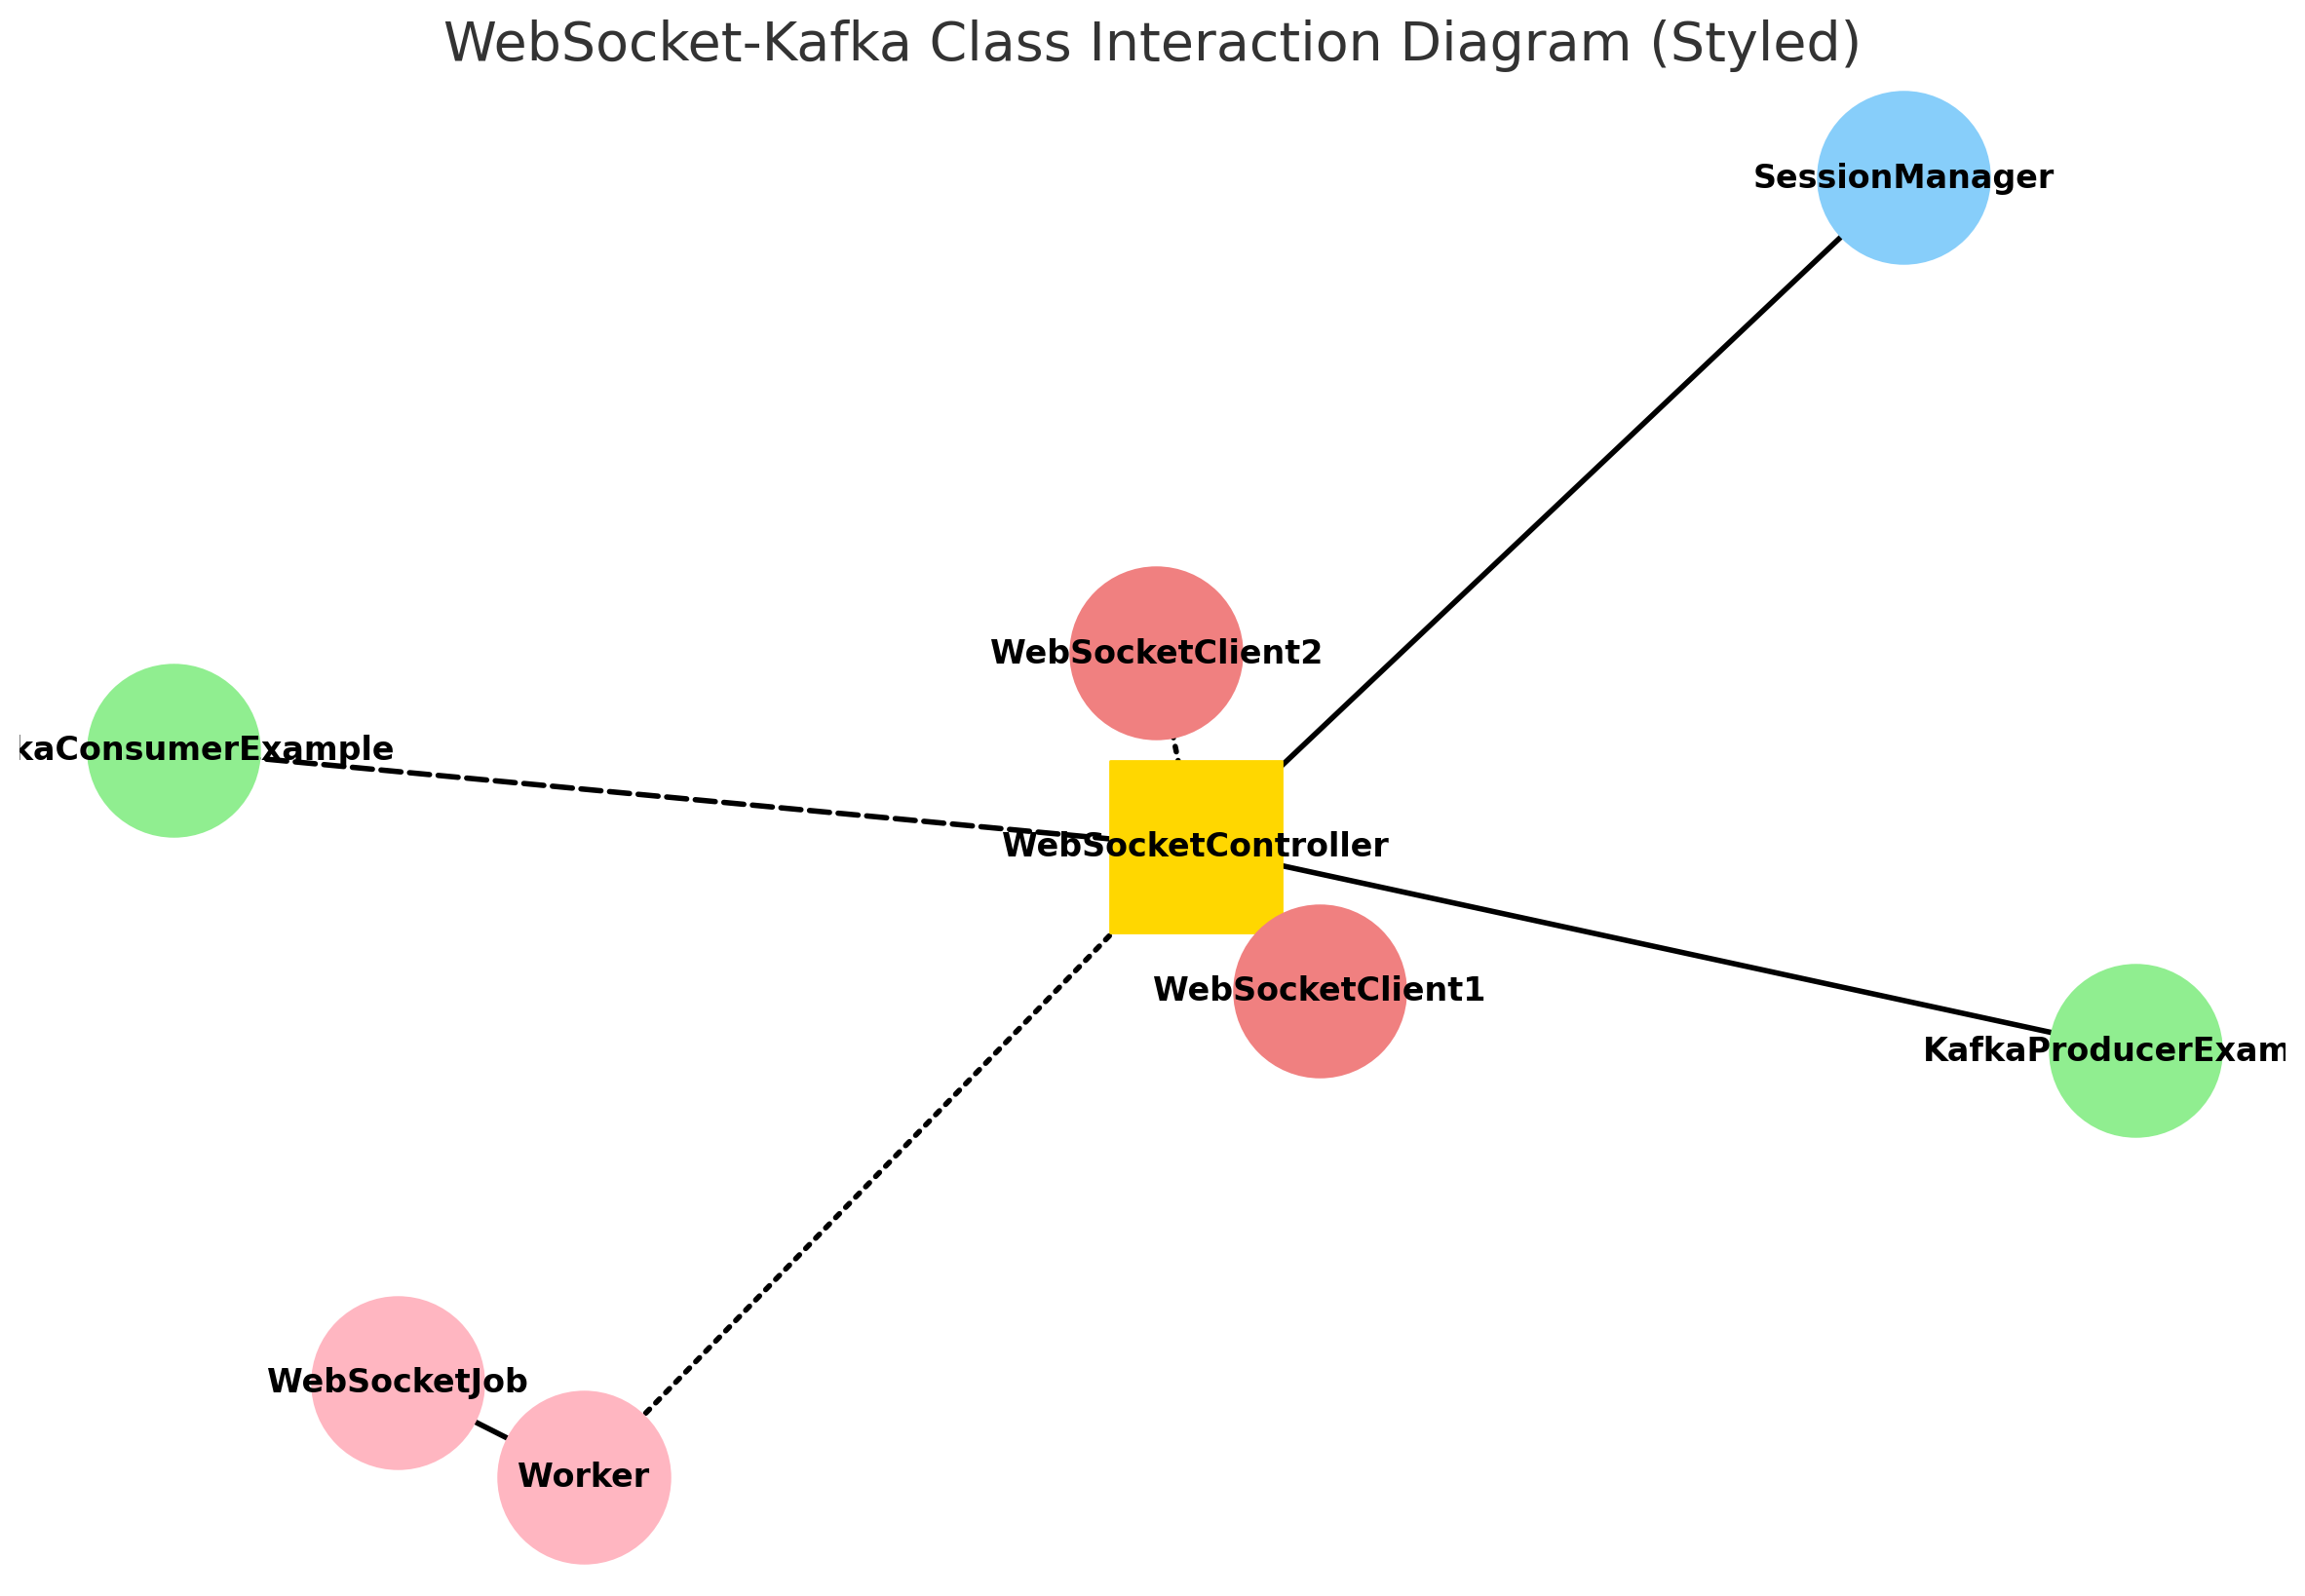 WebSocket-Kafka Class Interaction Diagram (Styled)